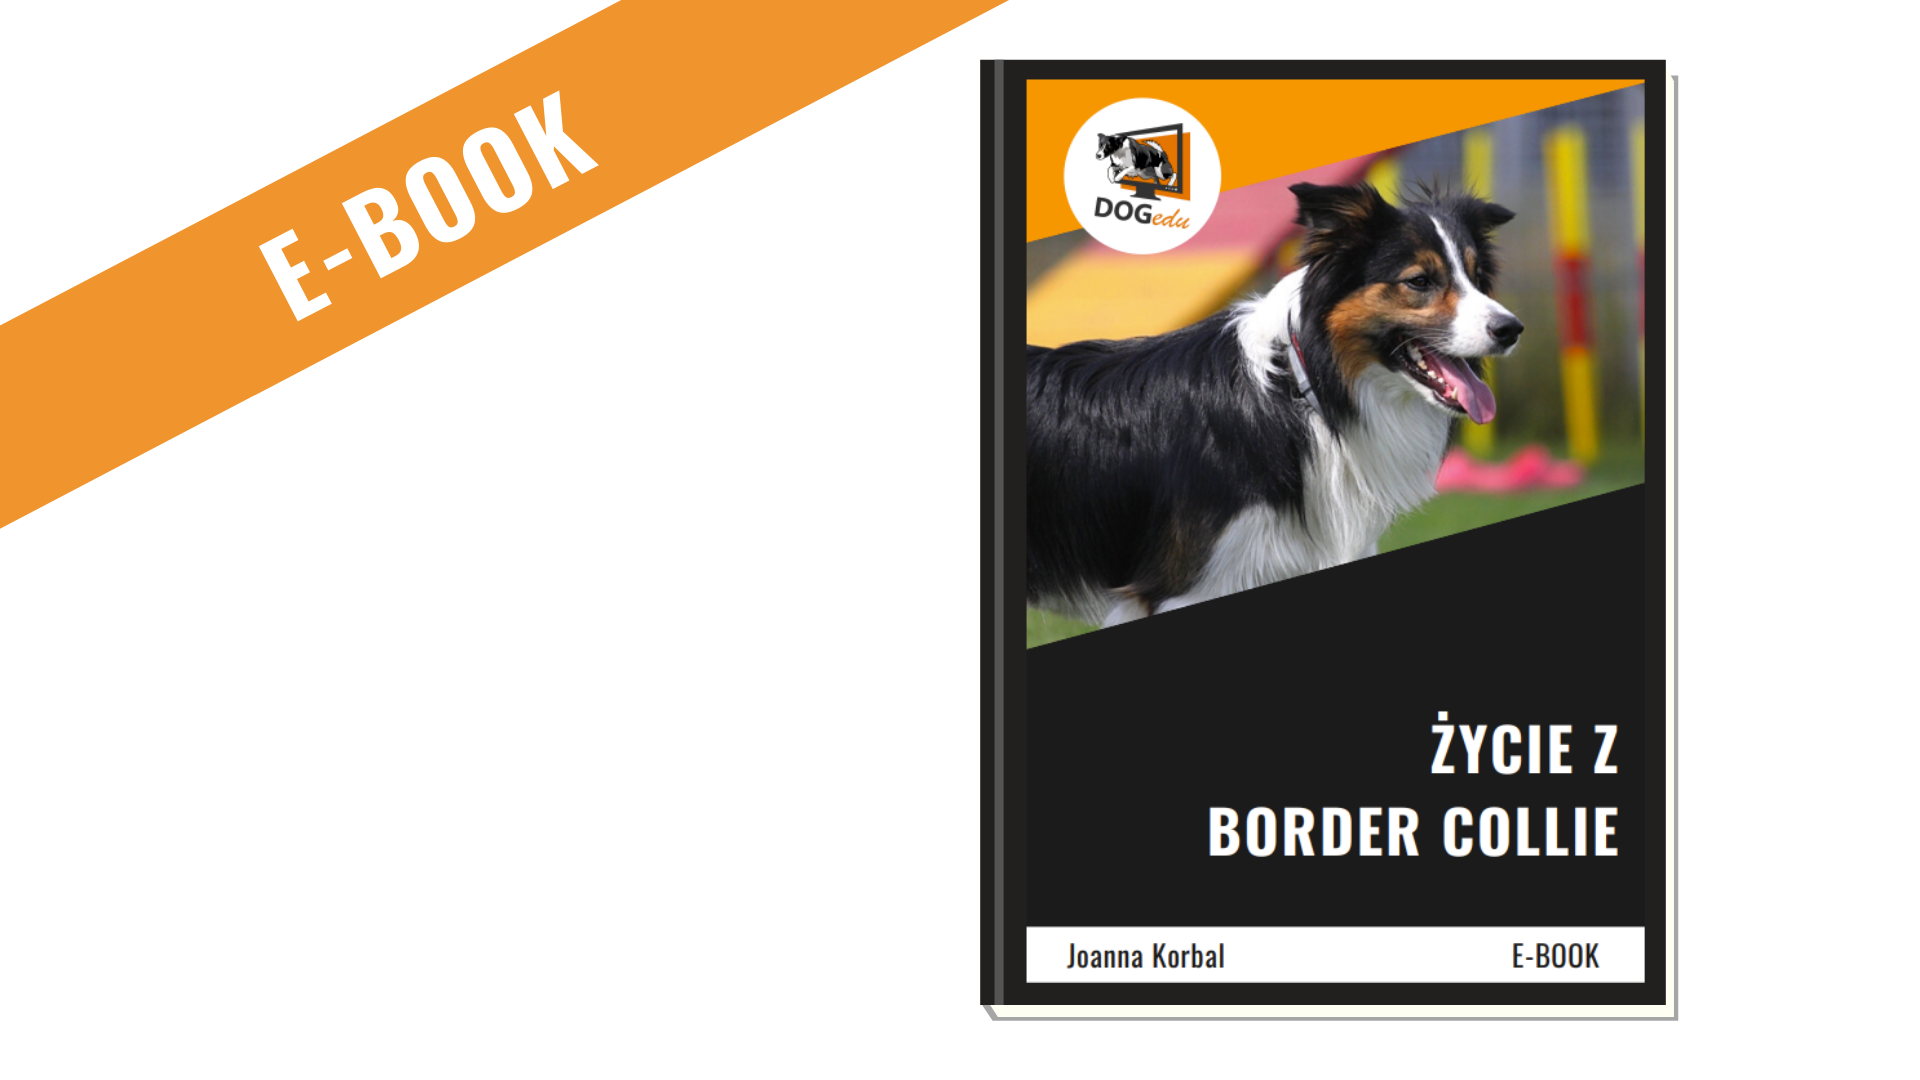 E-book: Życie z border collie